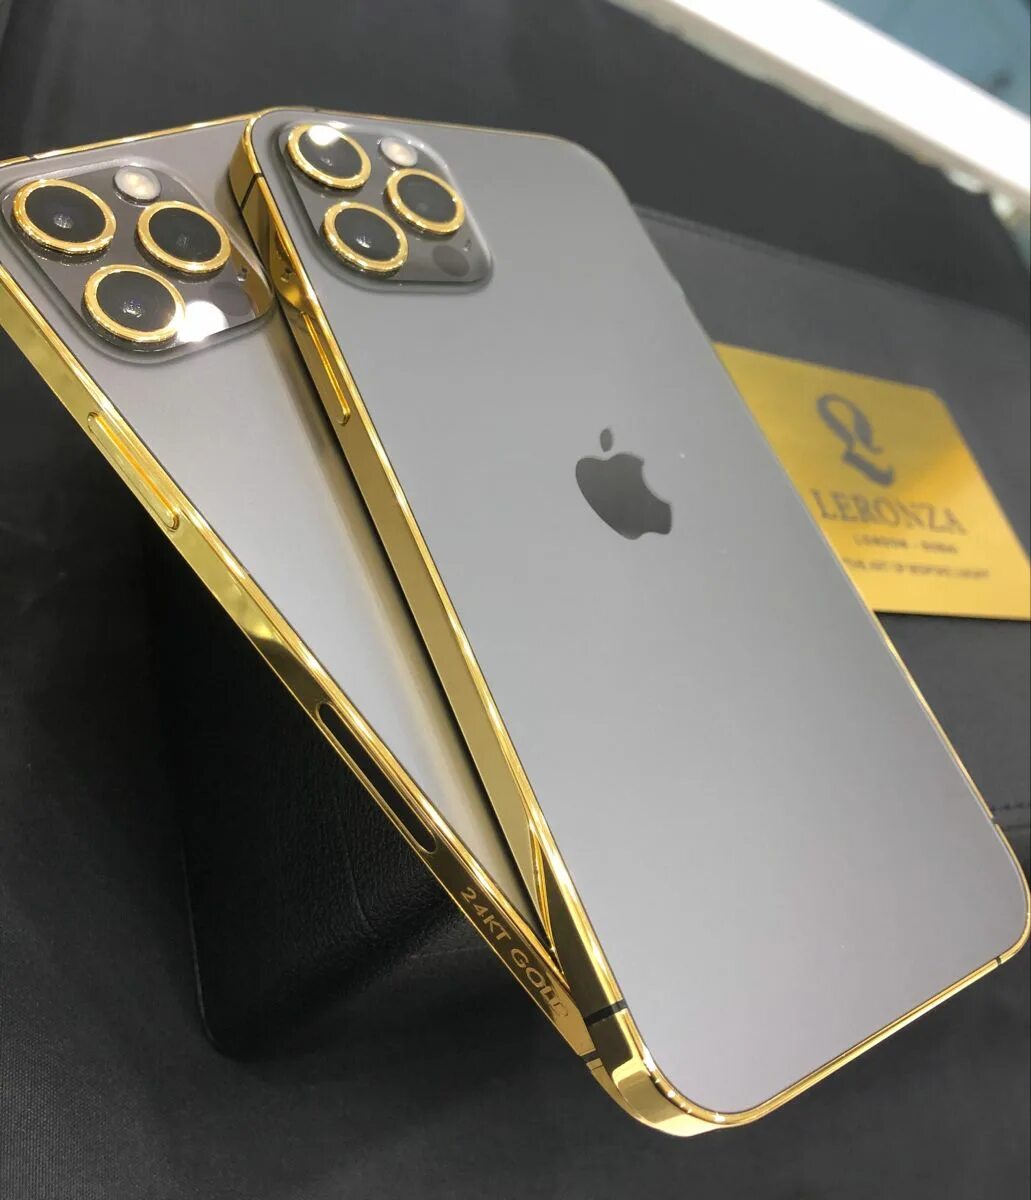 Iphone 12 Pro Gold. Iphone 24k Gold. Айфон 12 Промакс золотой. Iphone 12 Pro Max золотой. Note 12 gold